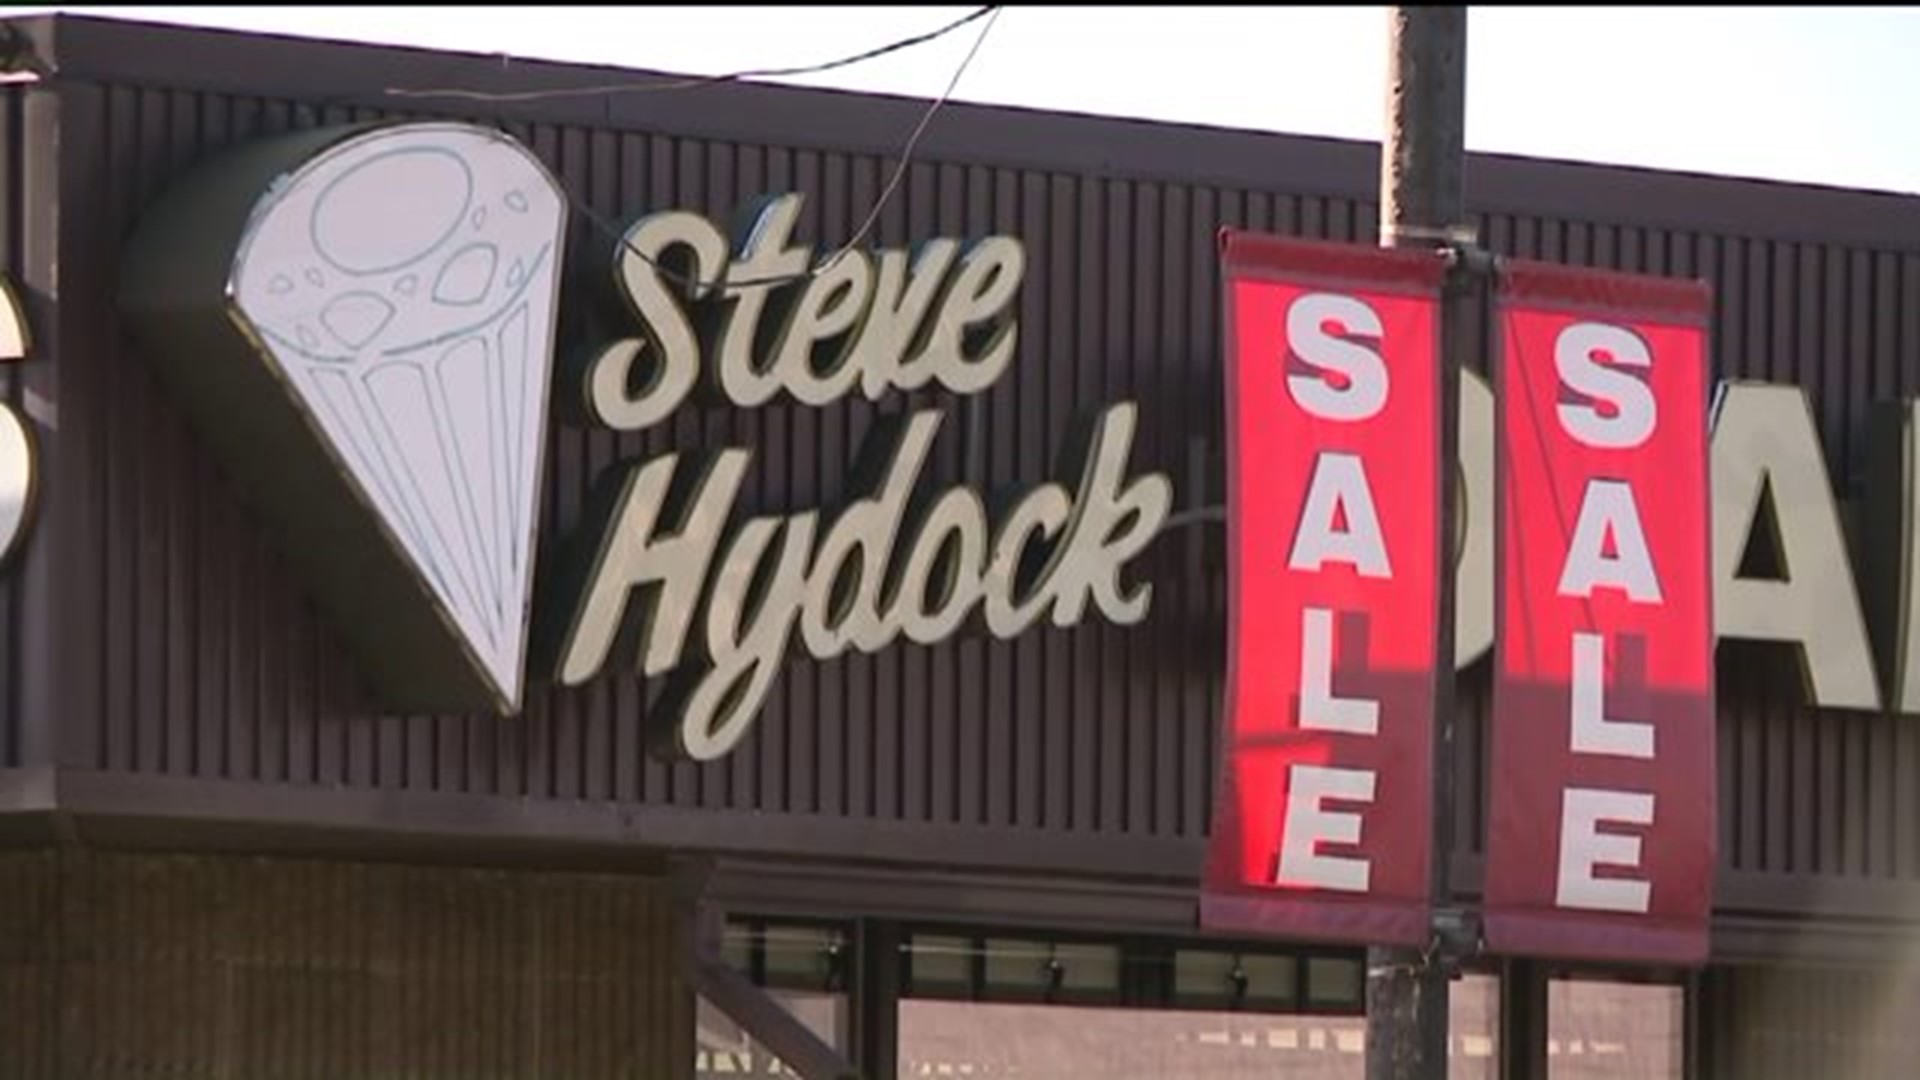 Steve Hydock Announces Plans to Close Jewelery Store